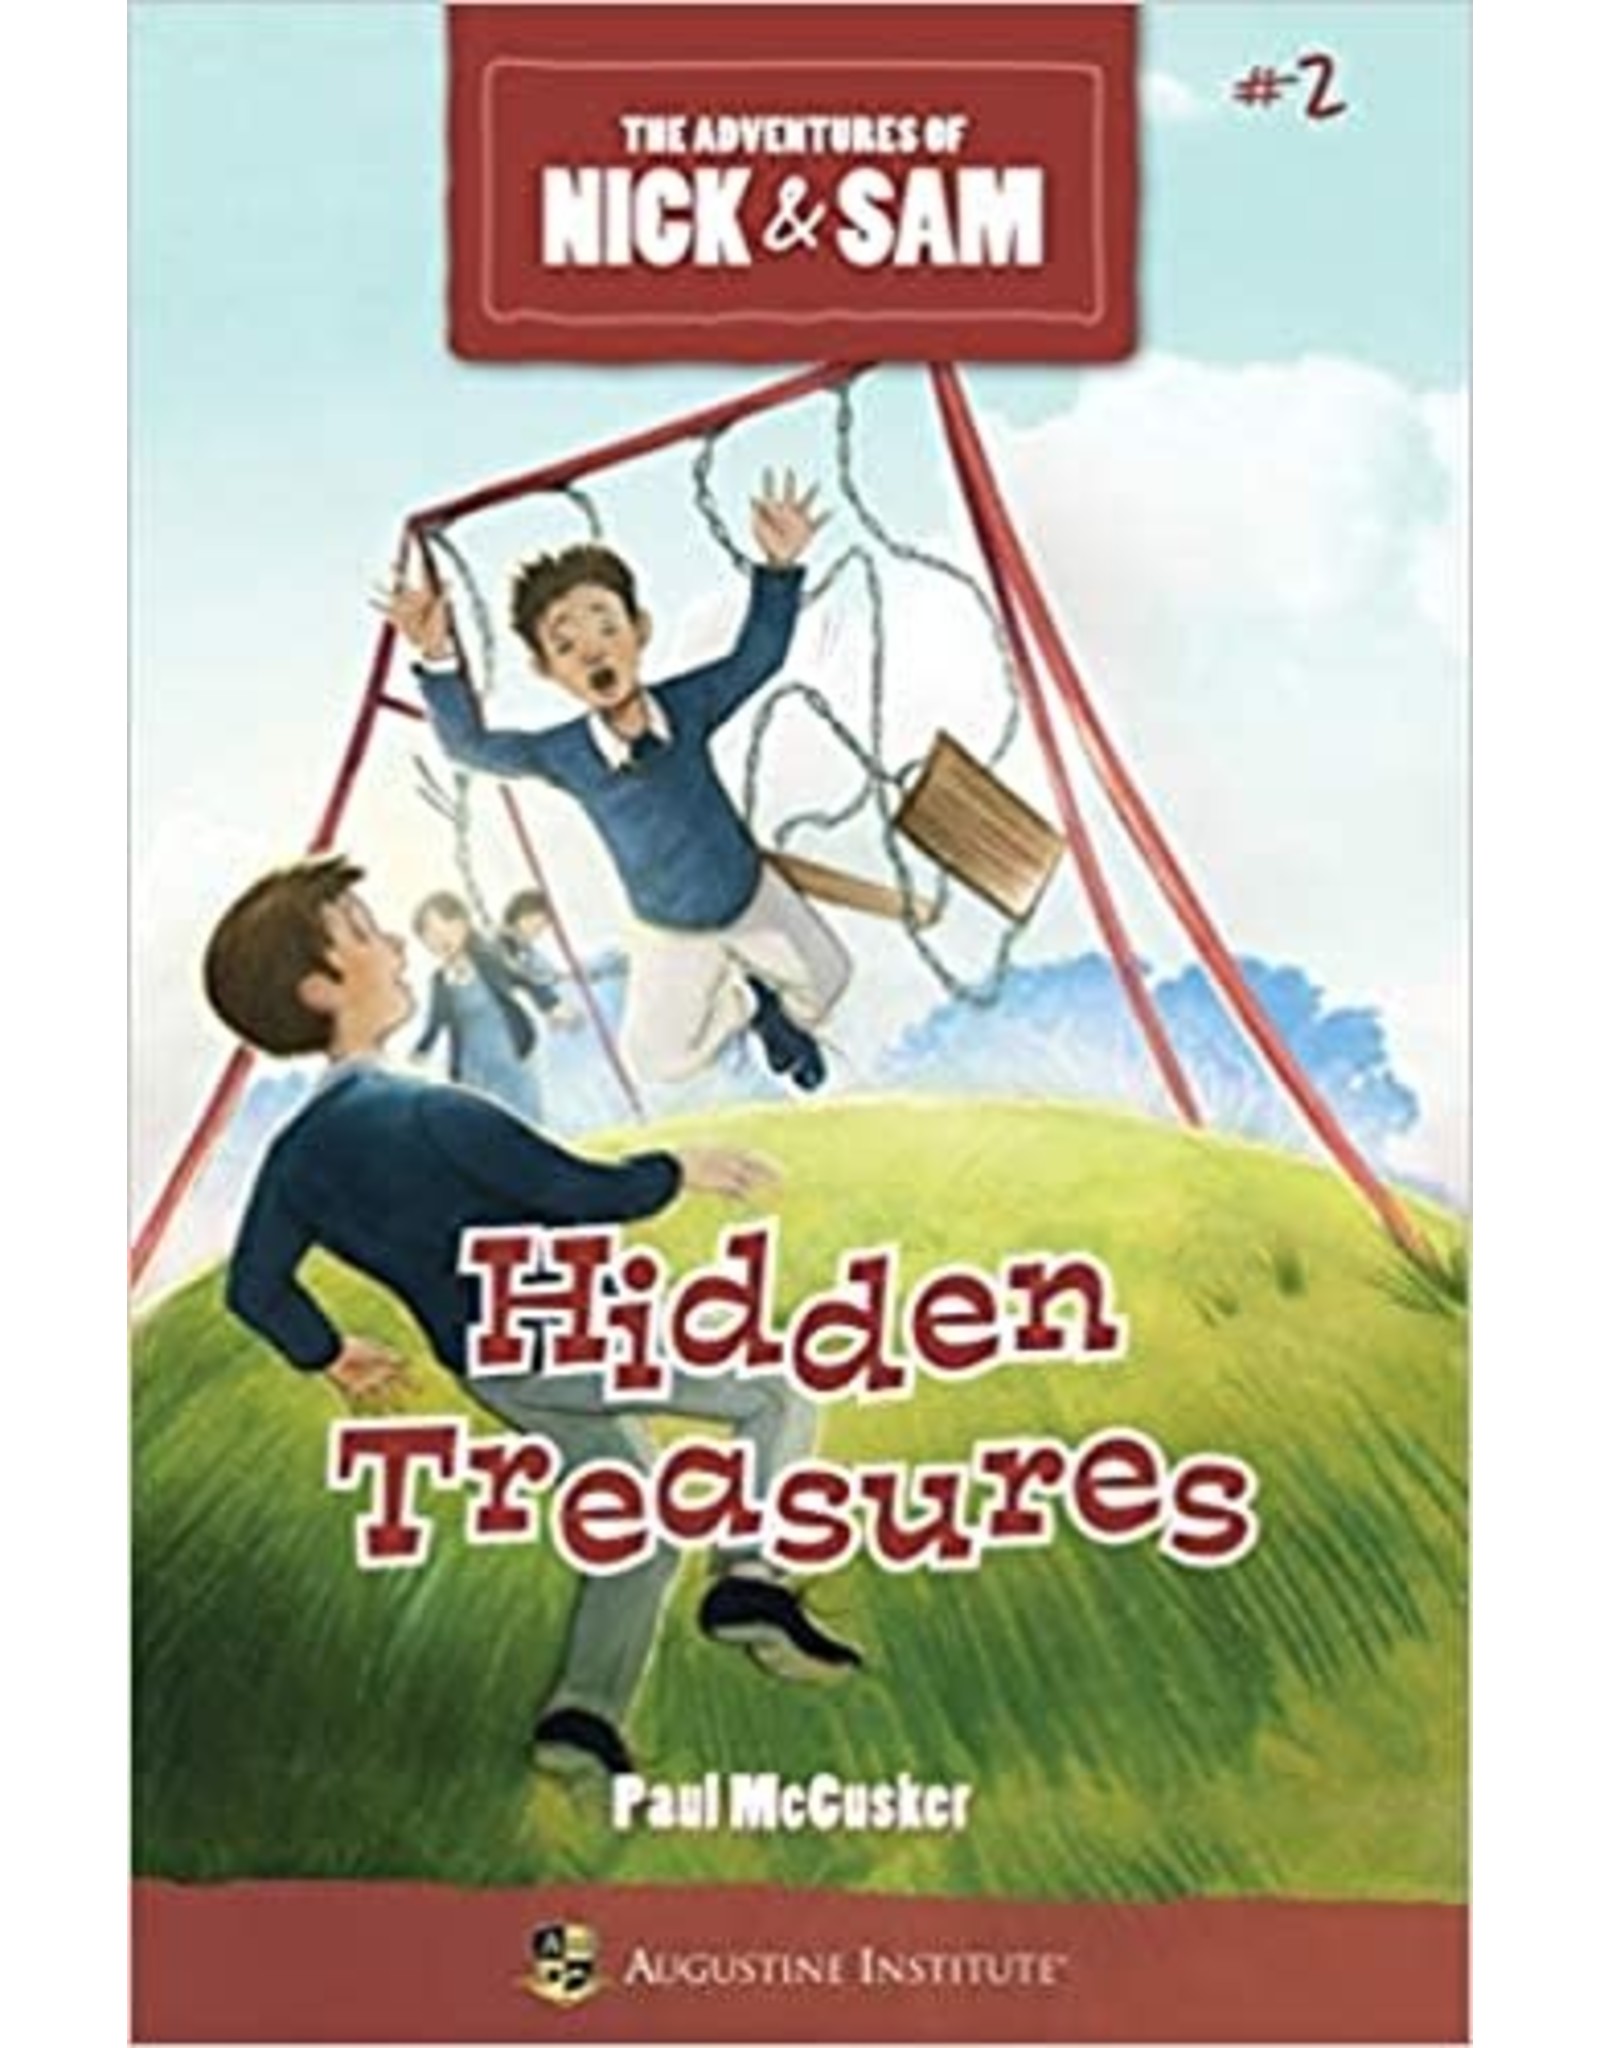 Augustine Institute The Adventures of Nick & Sam #2: Hidden Treasures by Paul McCusker